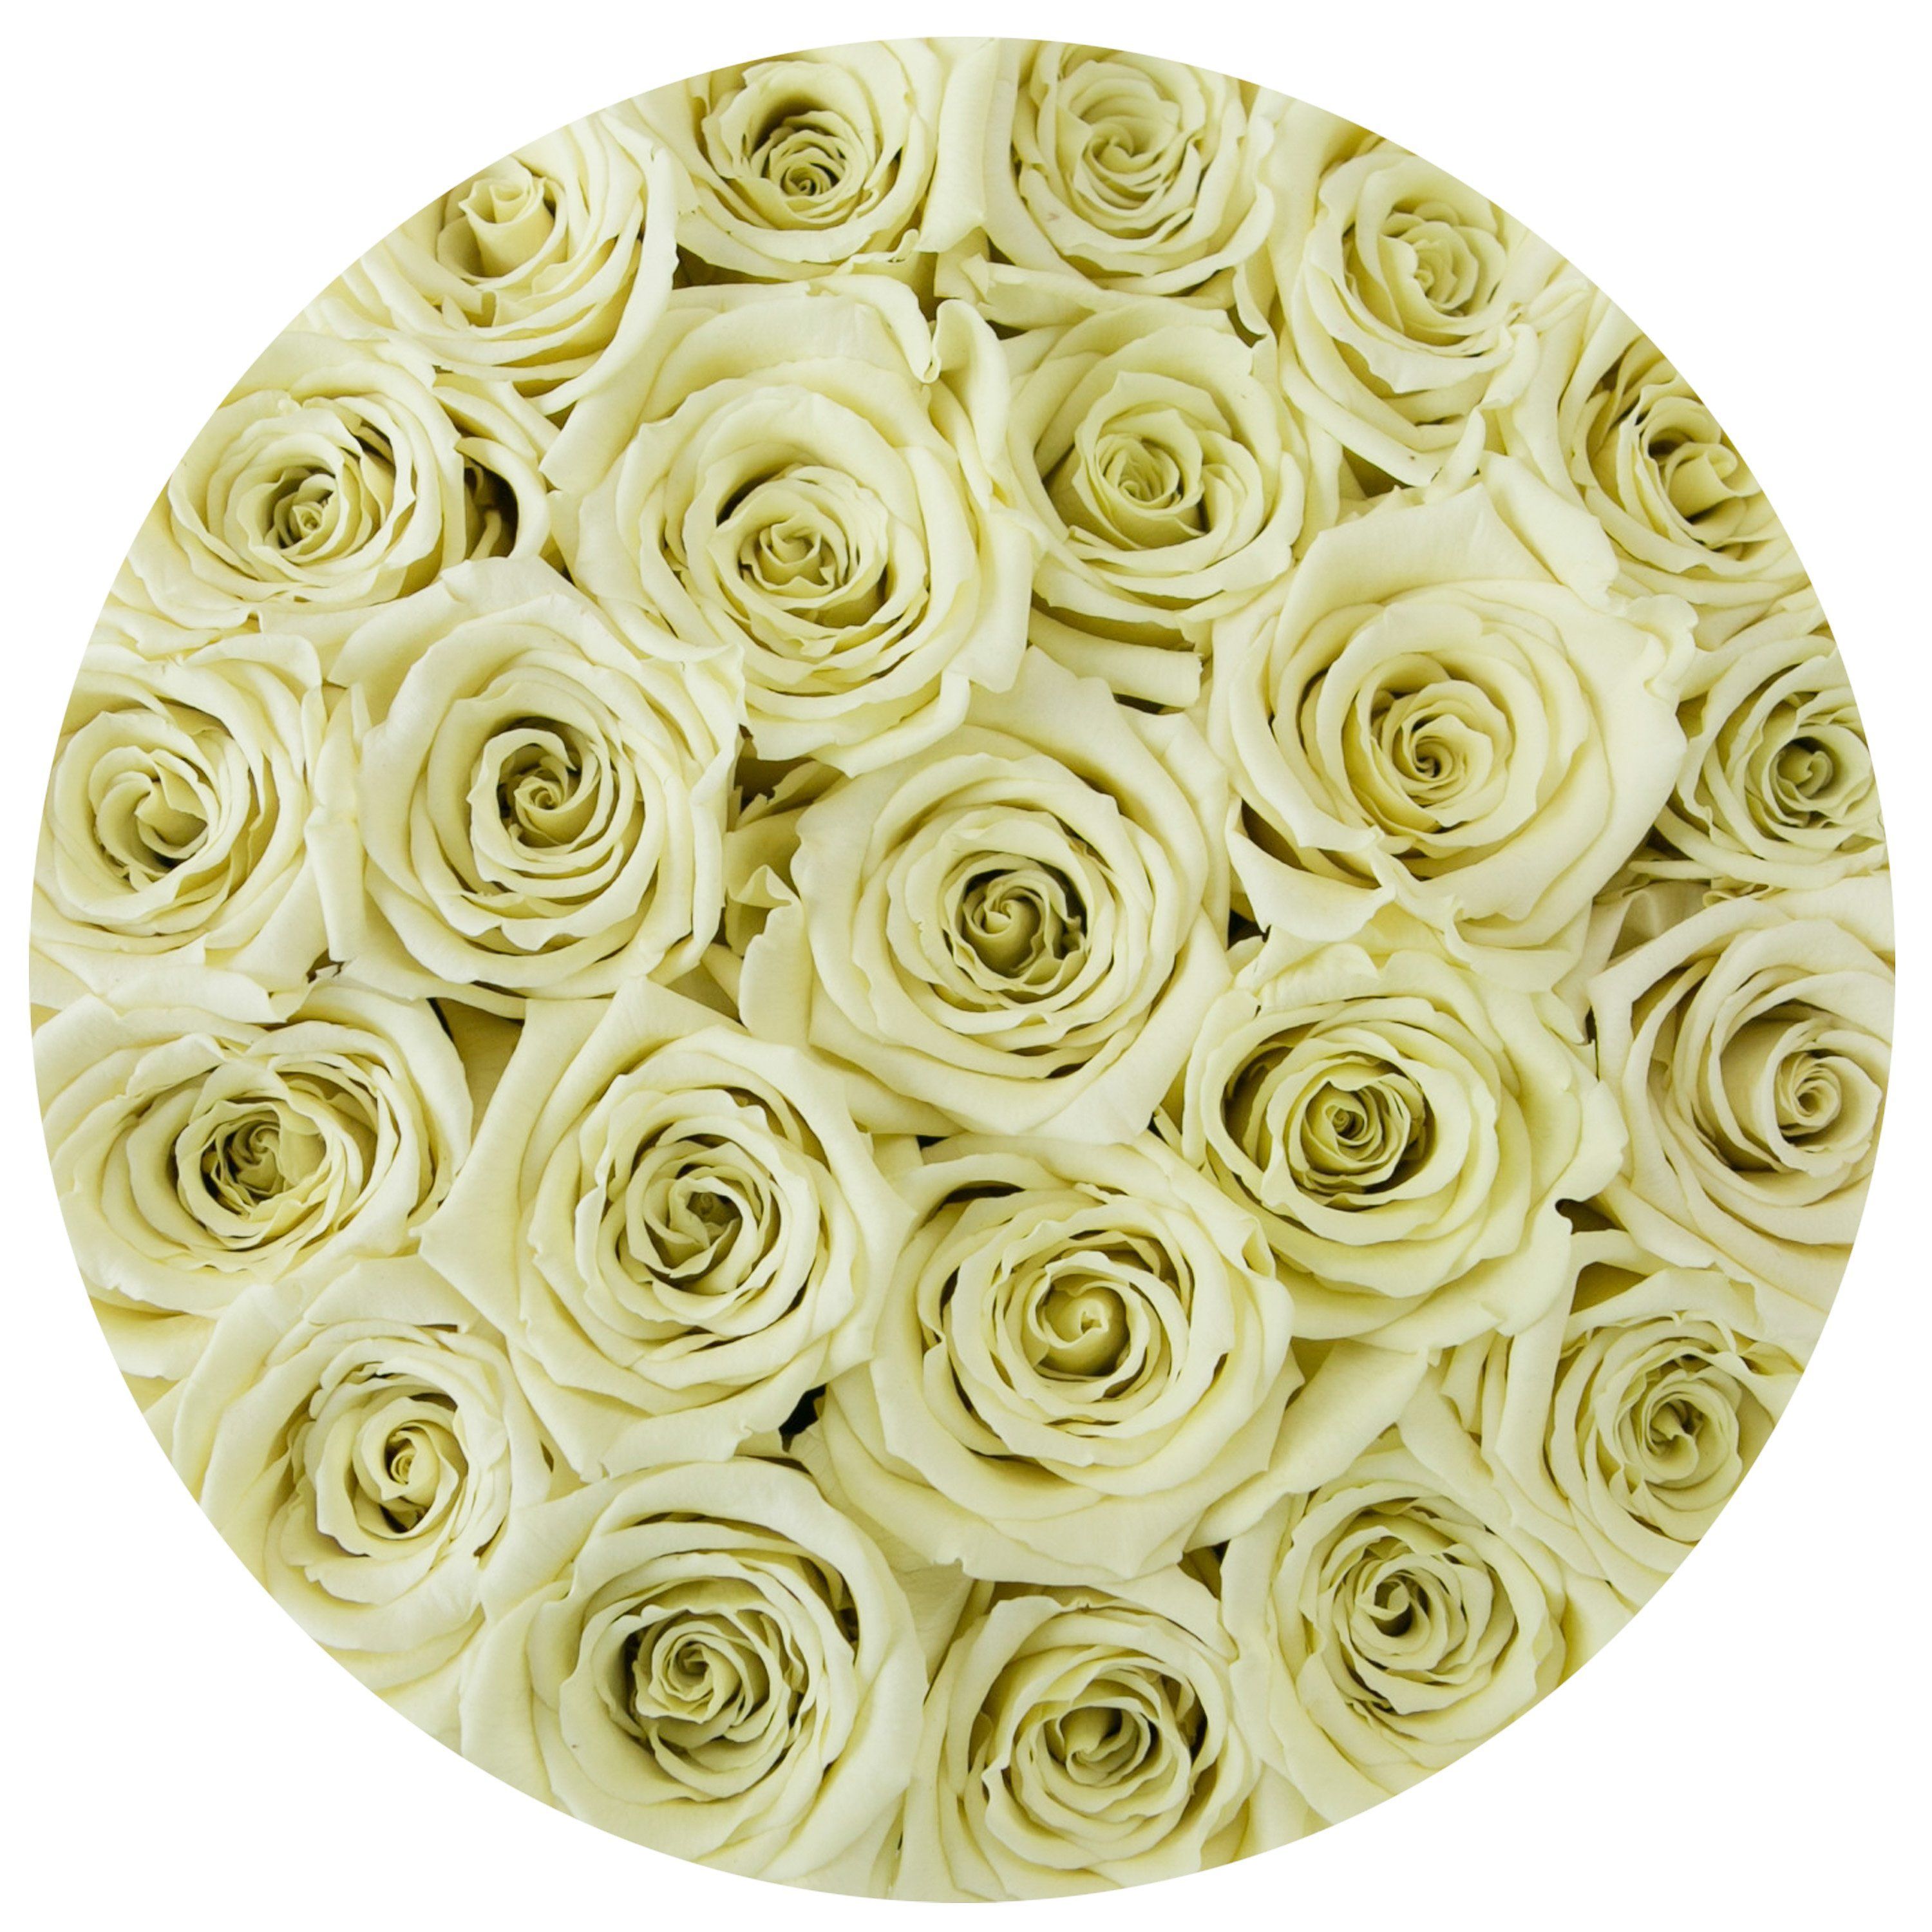 classic round box - black - vanilla roses vanilla eternity roses - the million roses